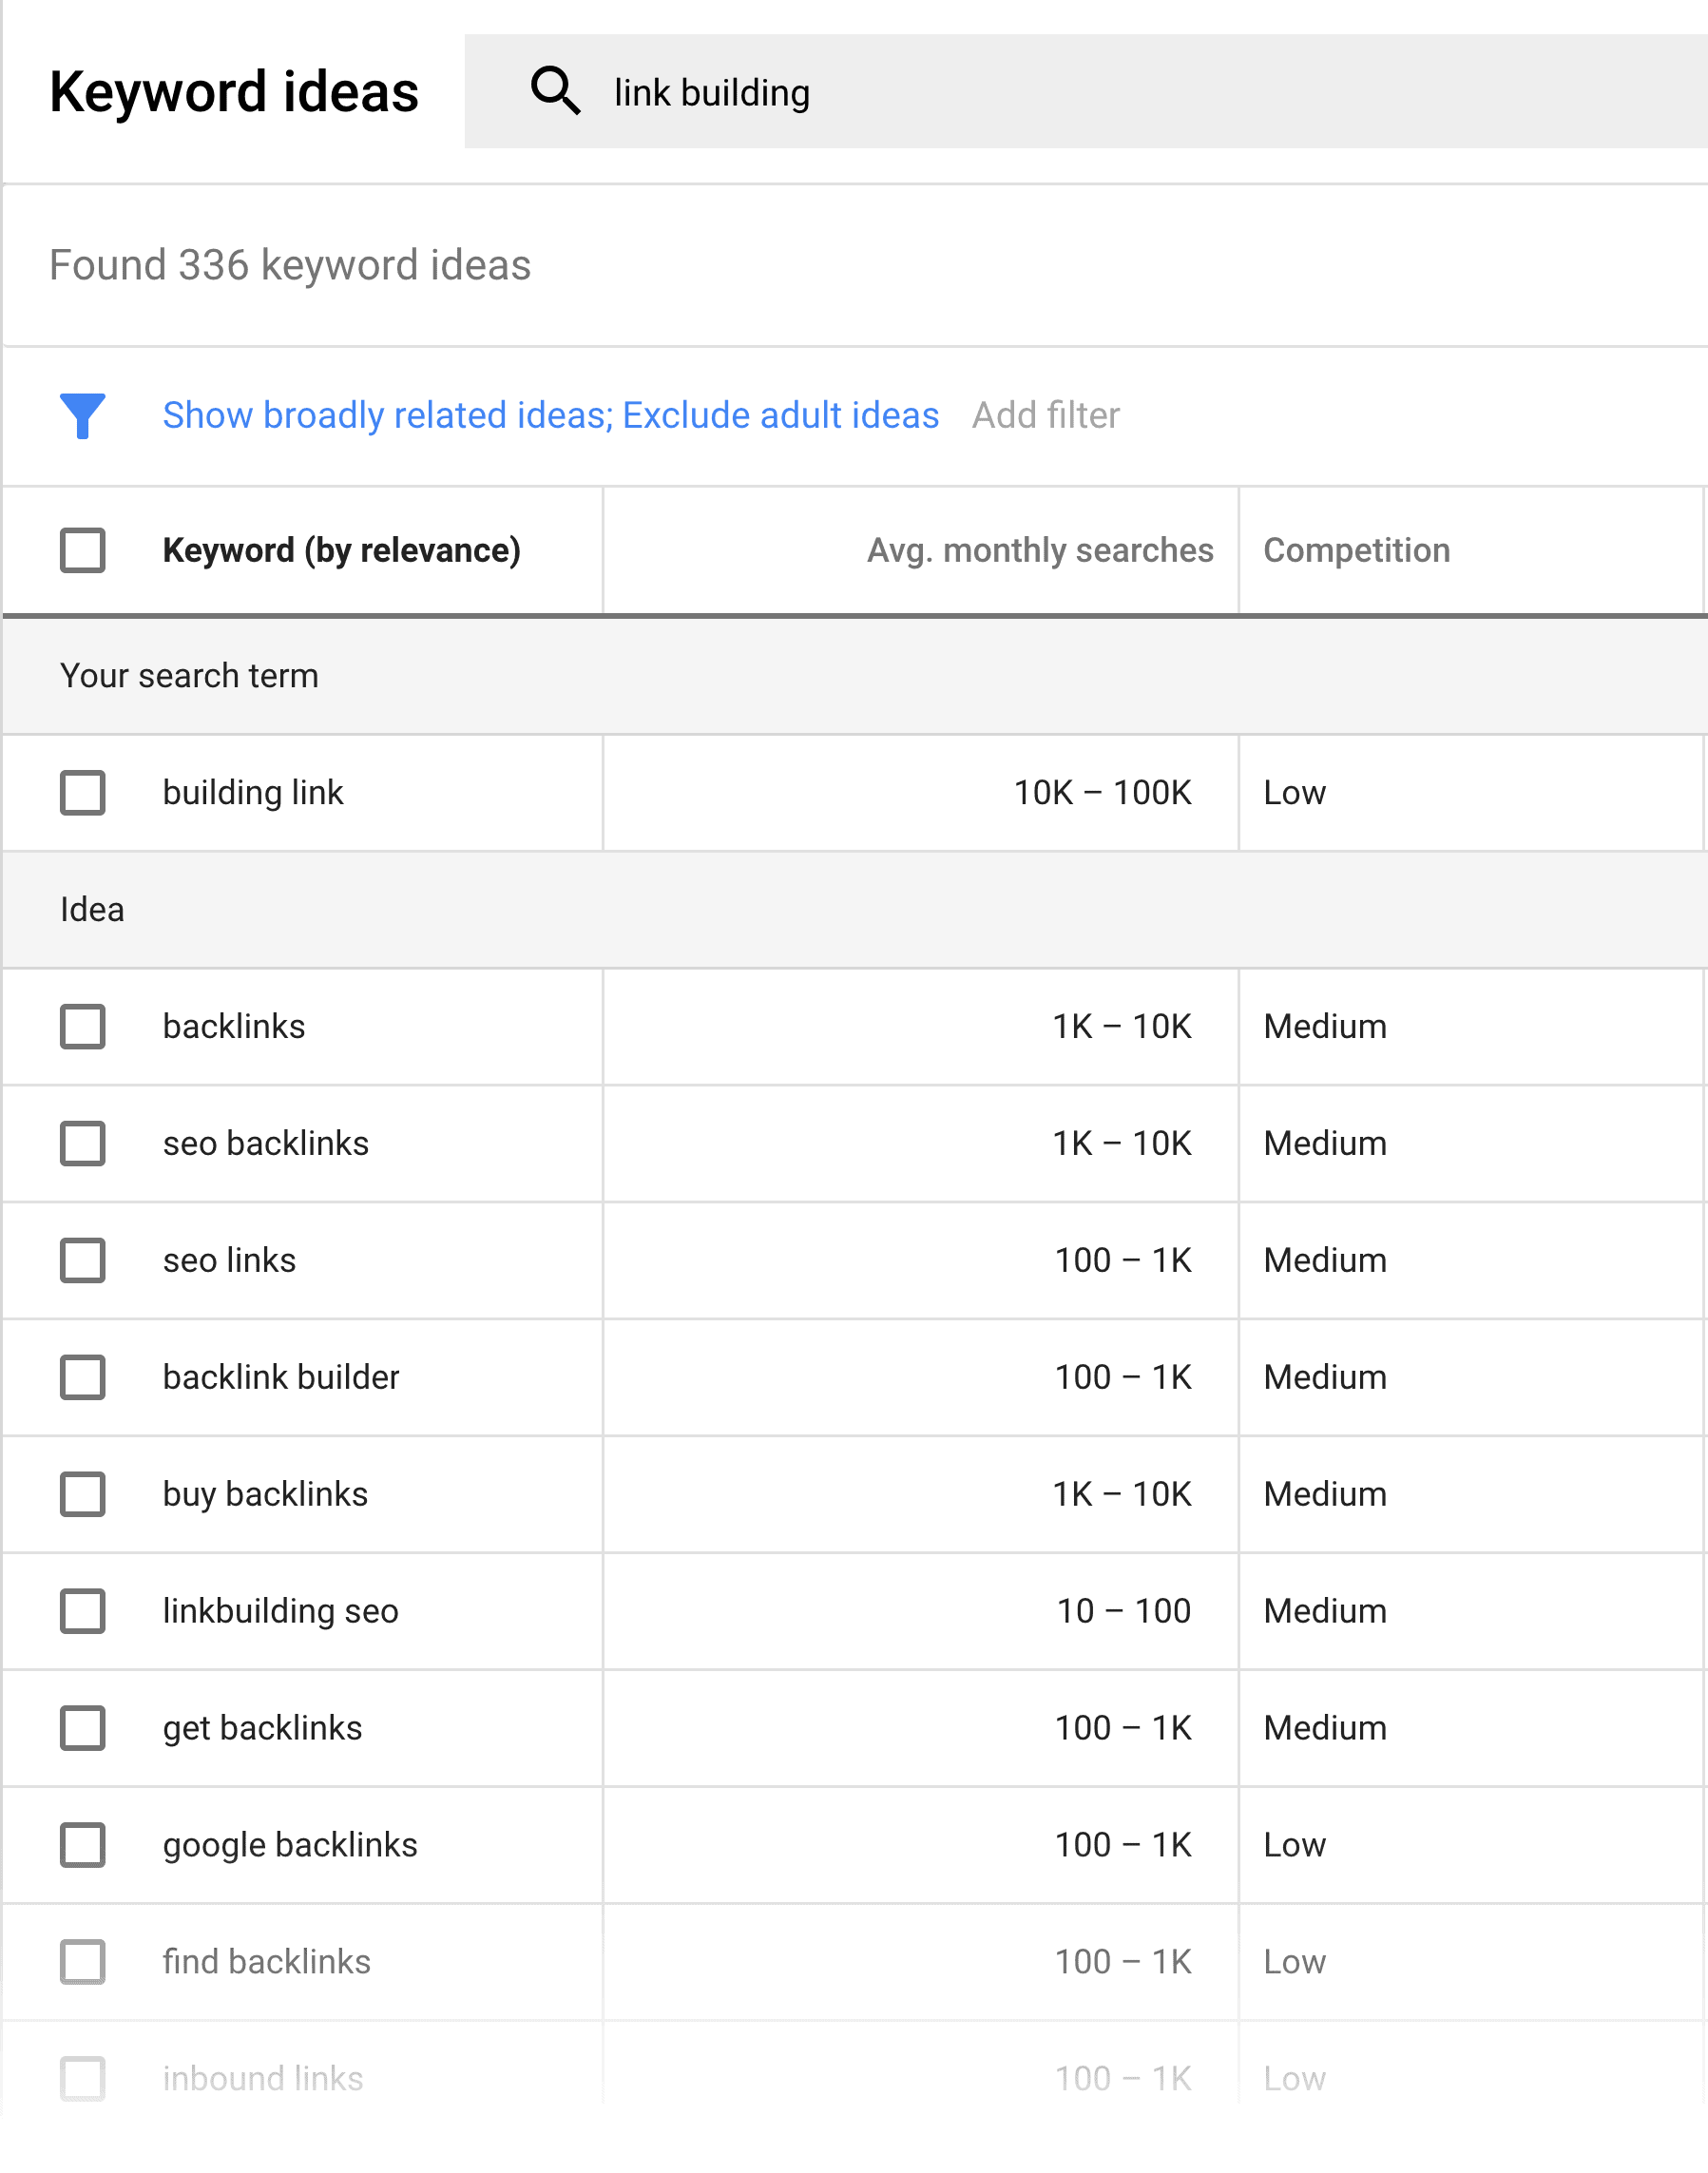 "link building" Google Keyword Planner results page